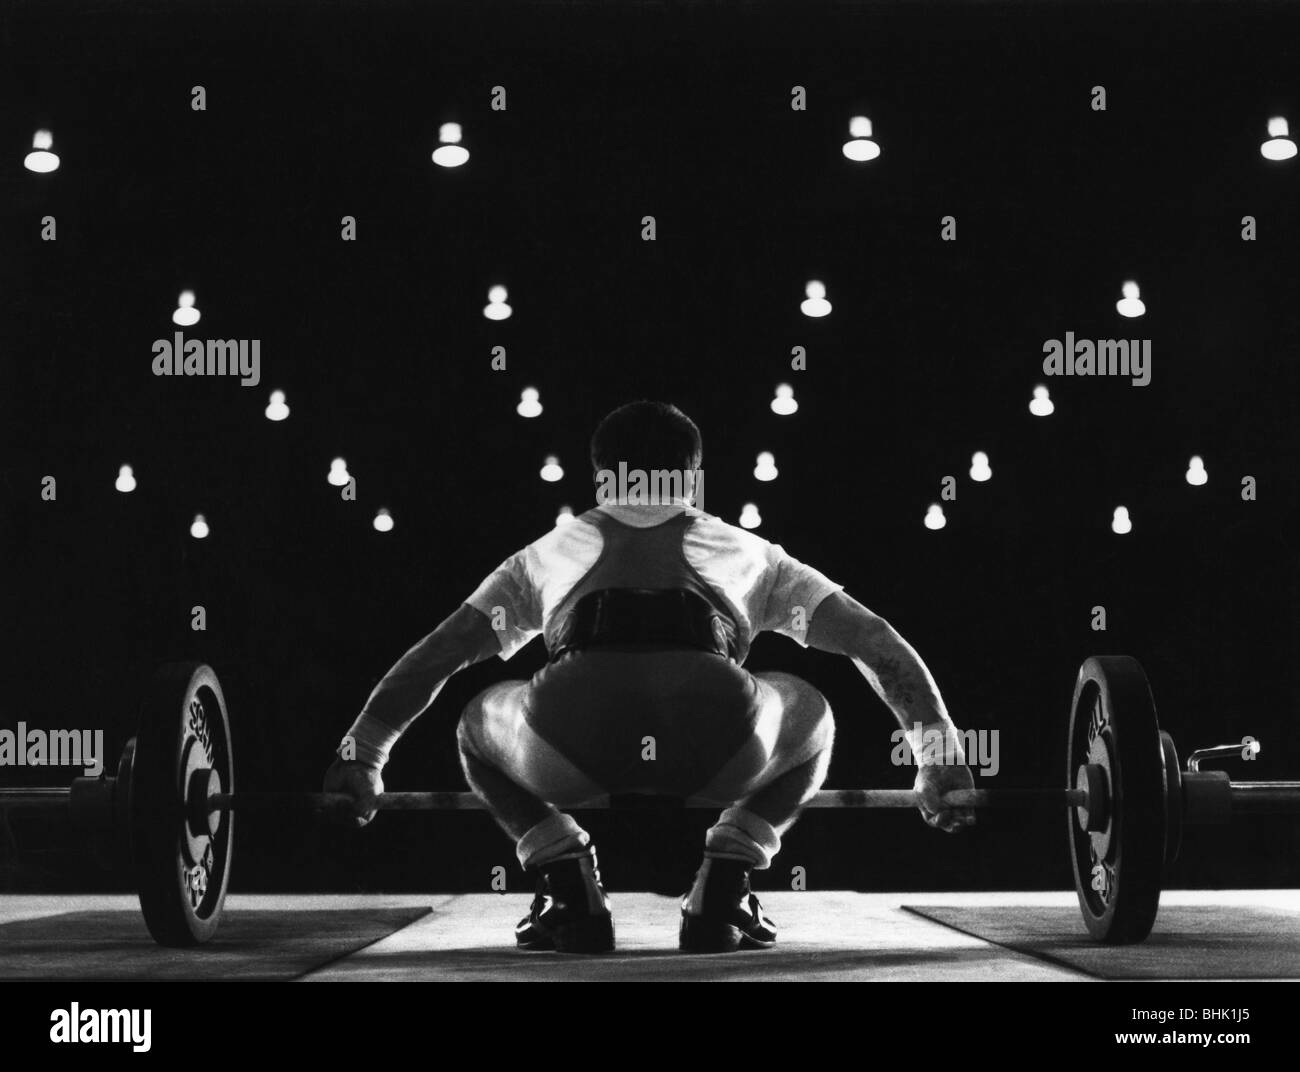 sport, sollevamento pesi, atleta pesante, circa 1970s, Foto Stock